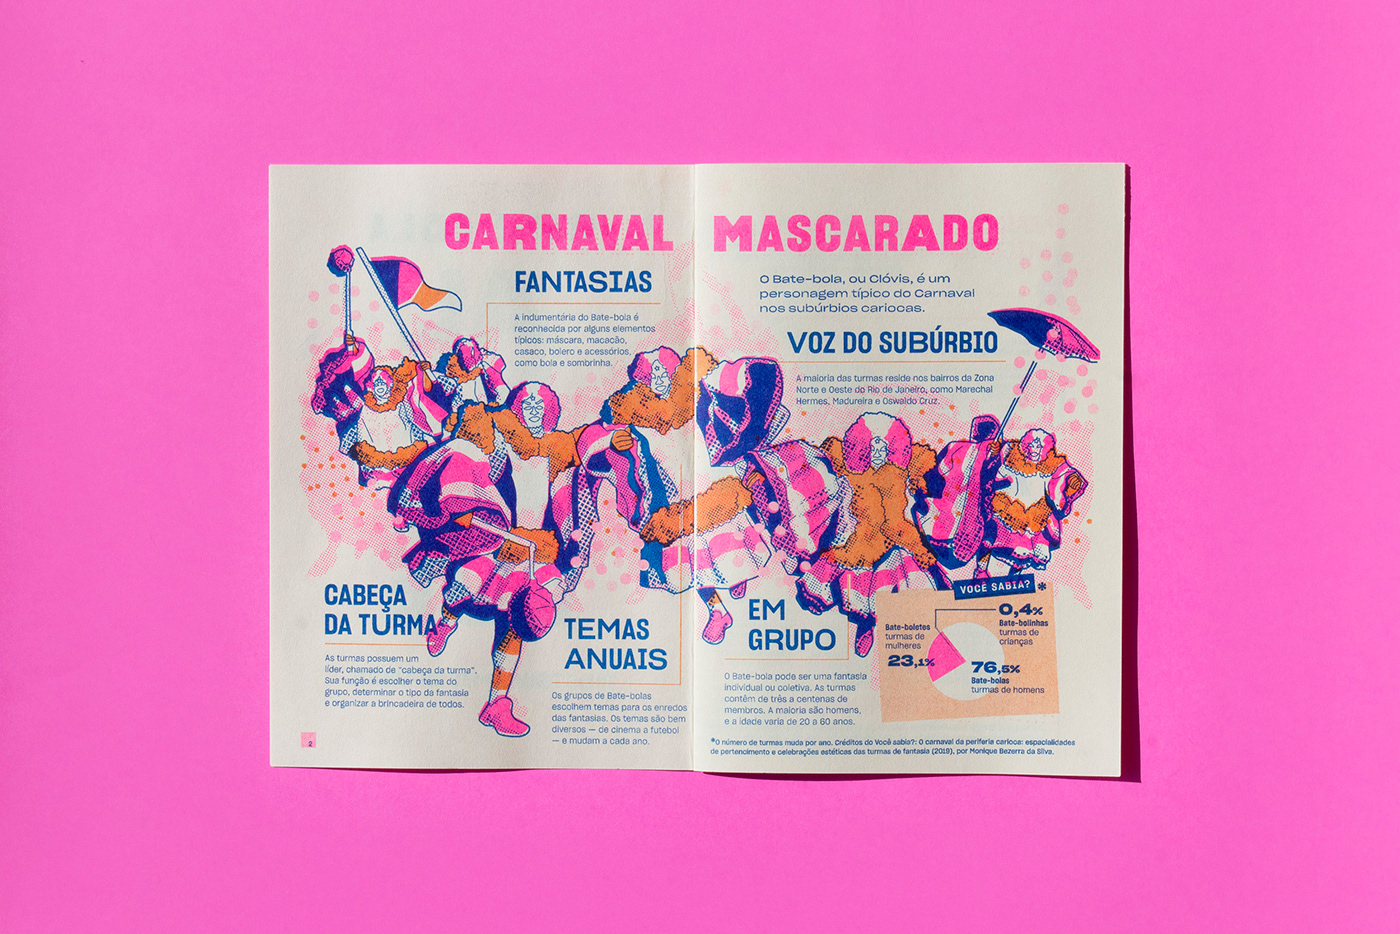 bate-bola Brasil Brazil carioca Carnaval Carnival Rio de Janeiro Riso risograph subúrbio